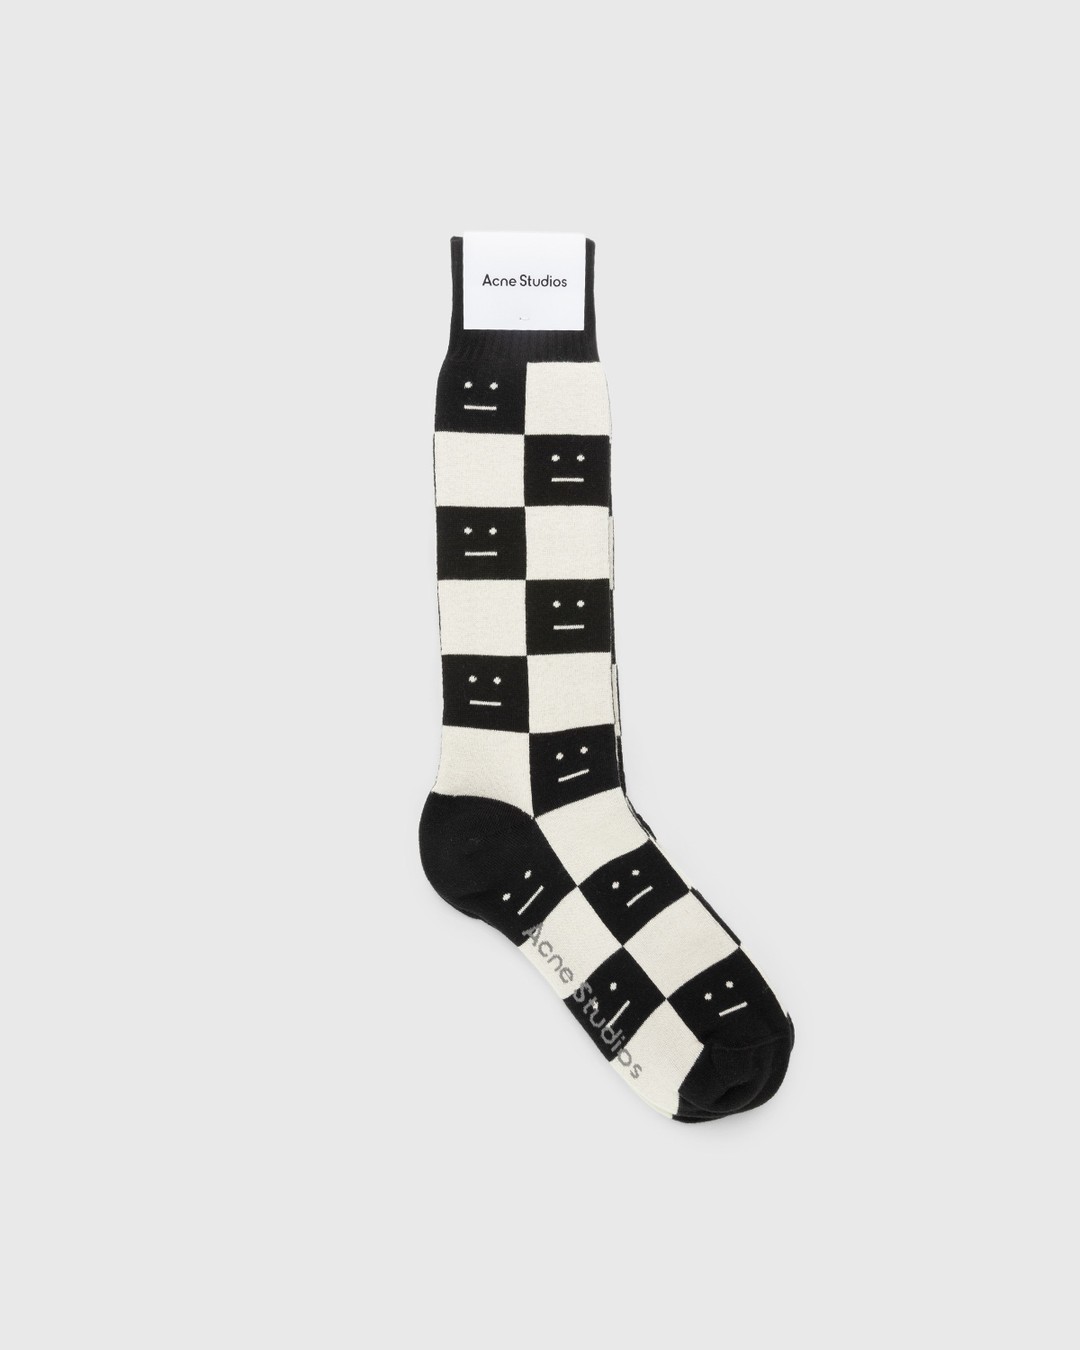 Acne Studios – Checkerboard Socks Black/Oatmeal Beige - Crew - Black - Image 1